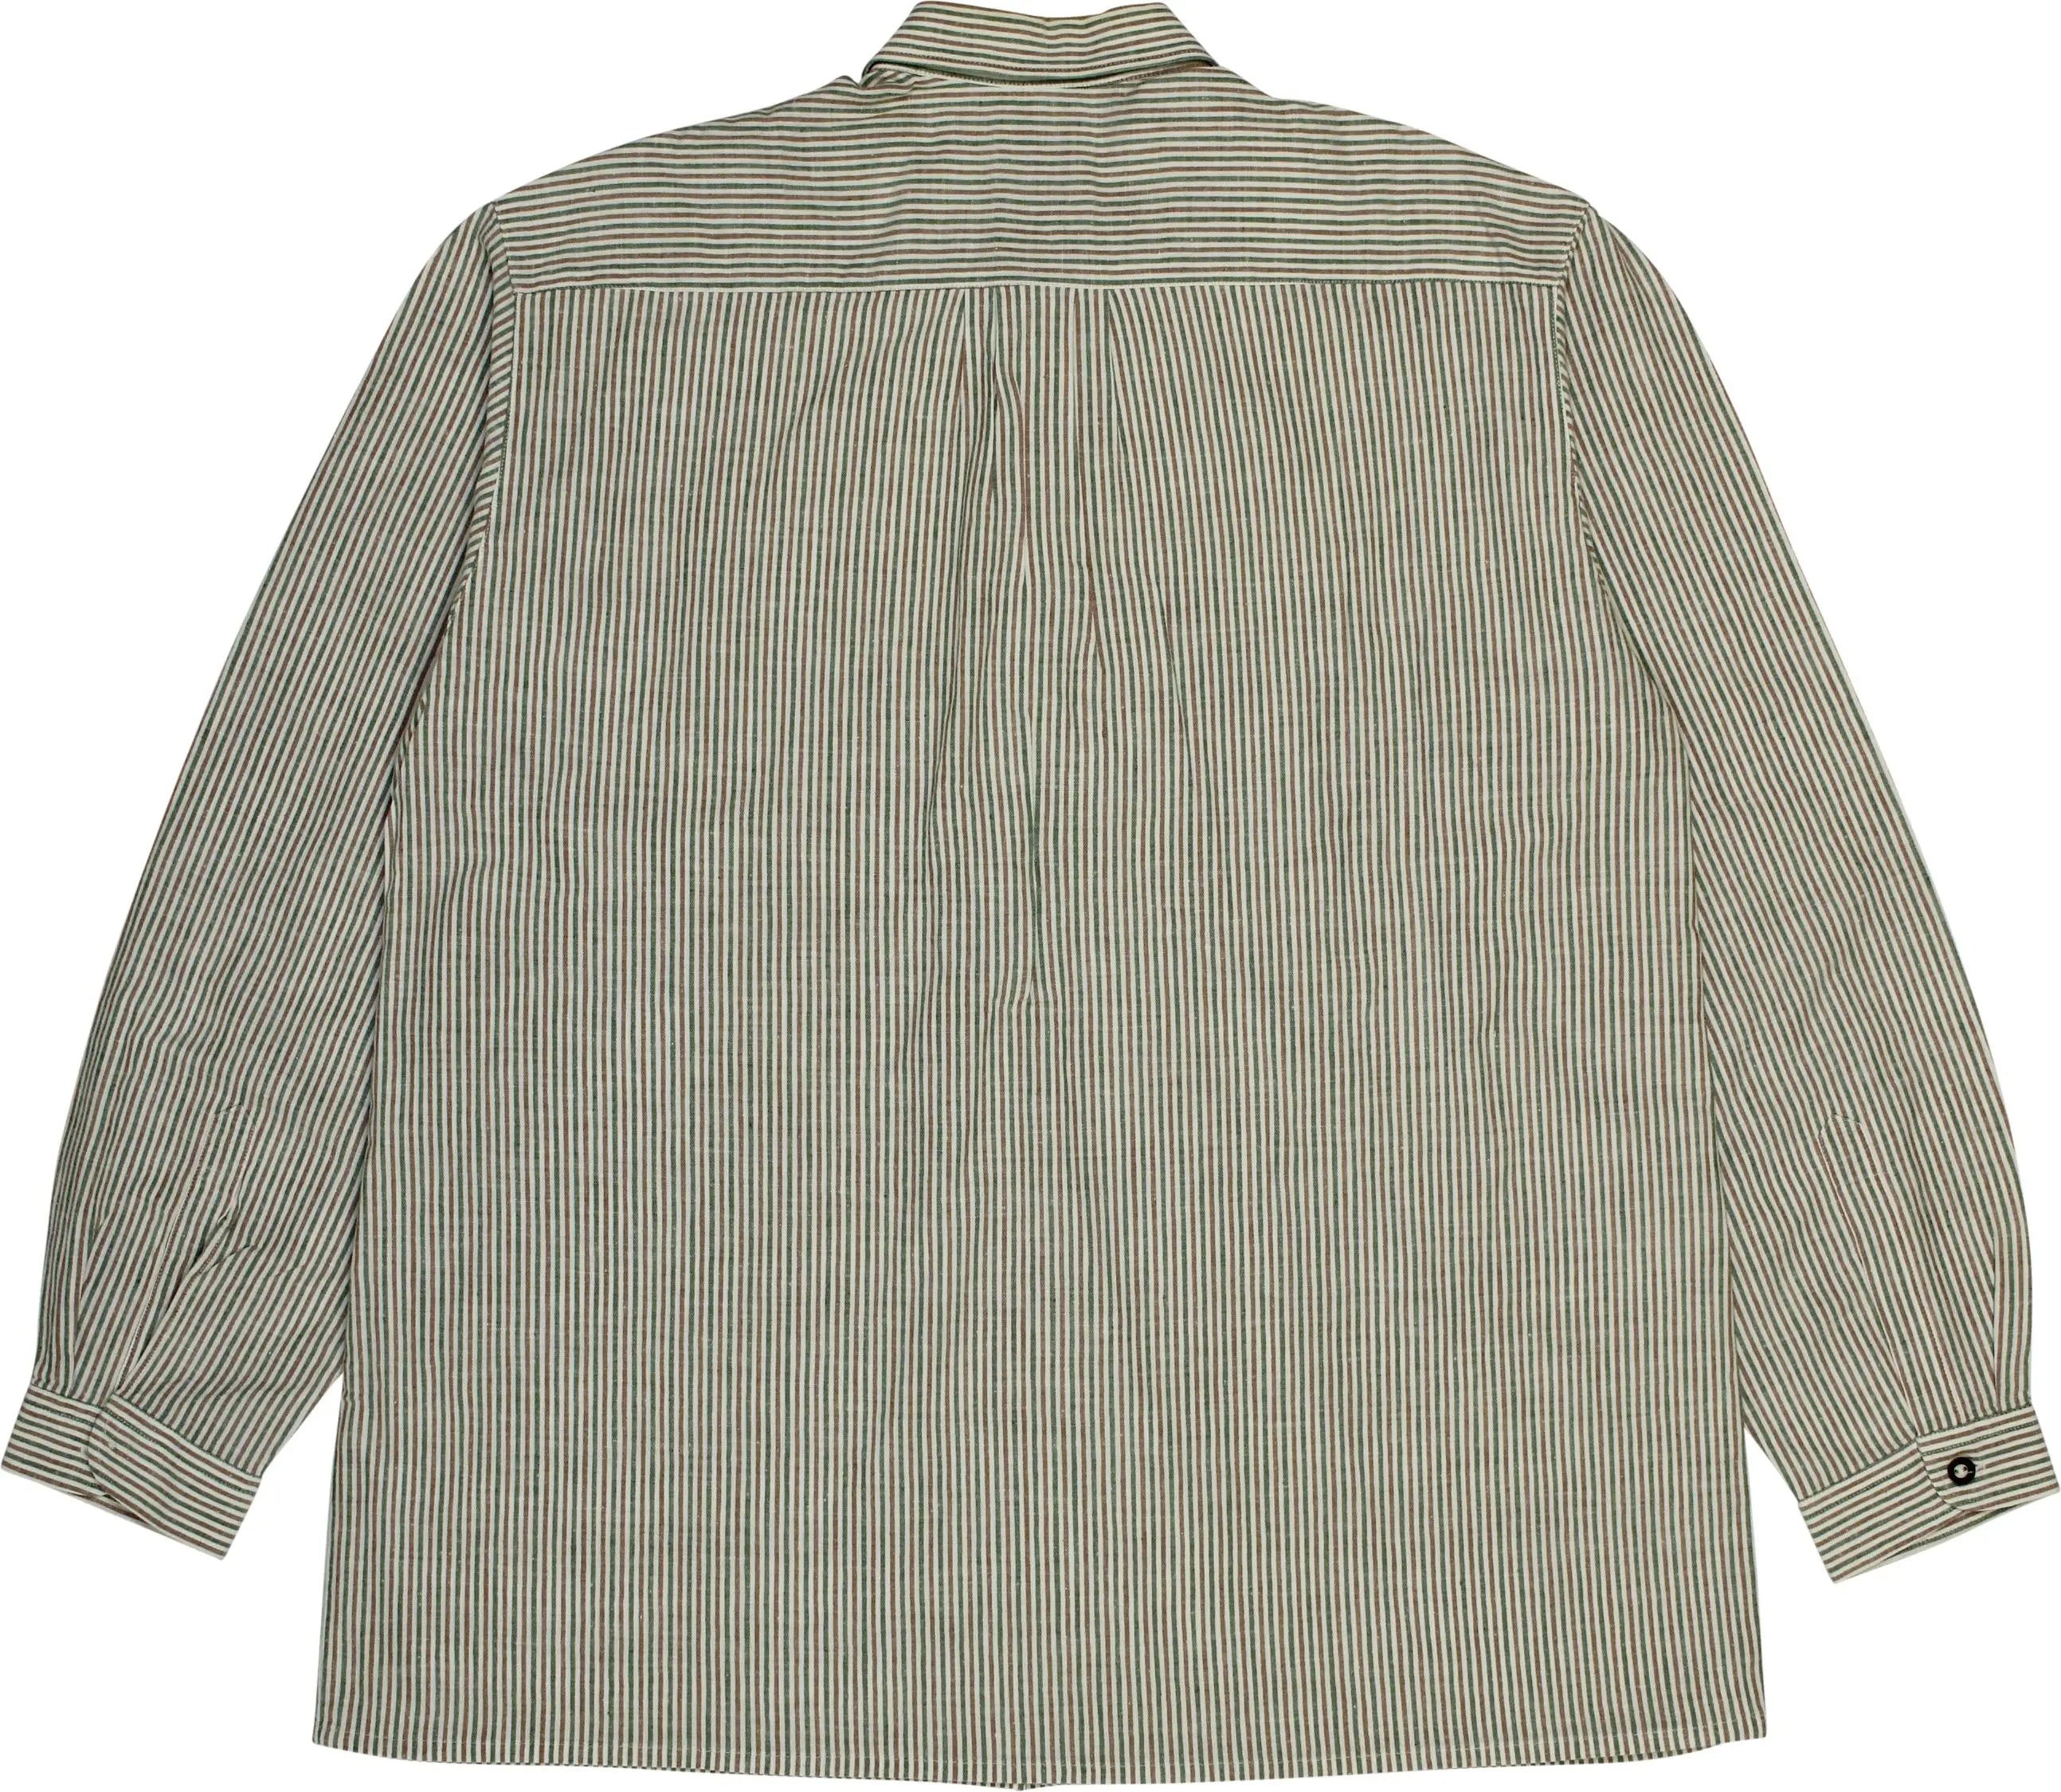 Gloriette - German Folk Shirt- ThriftTale.com - Vintage and second handclothing